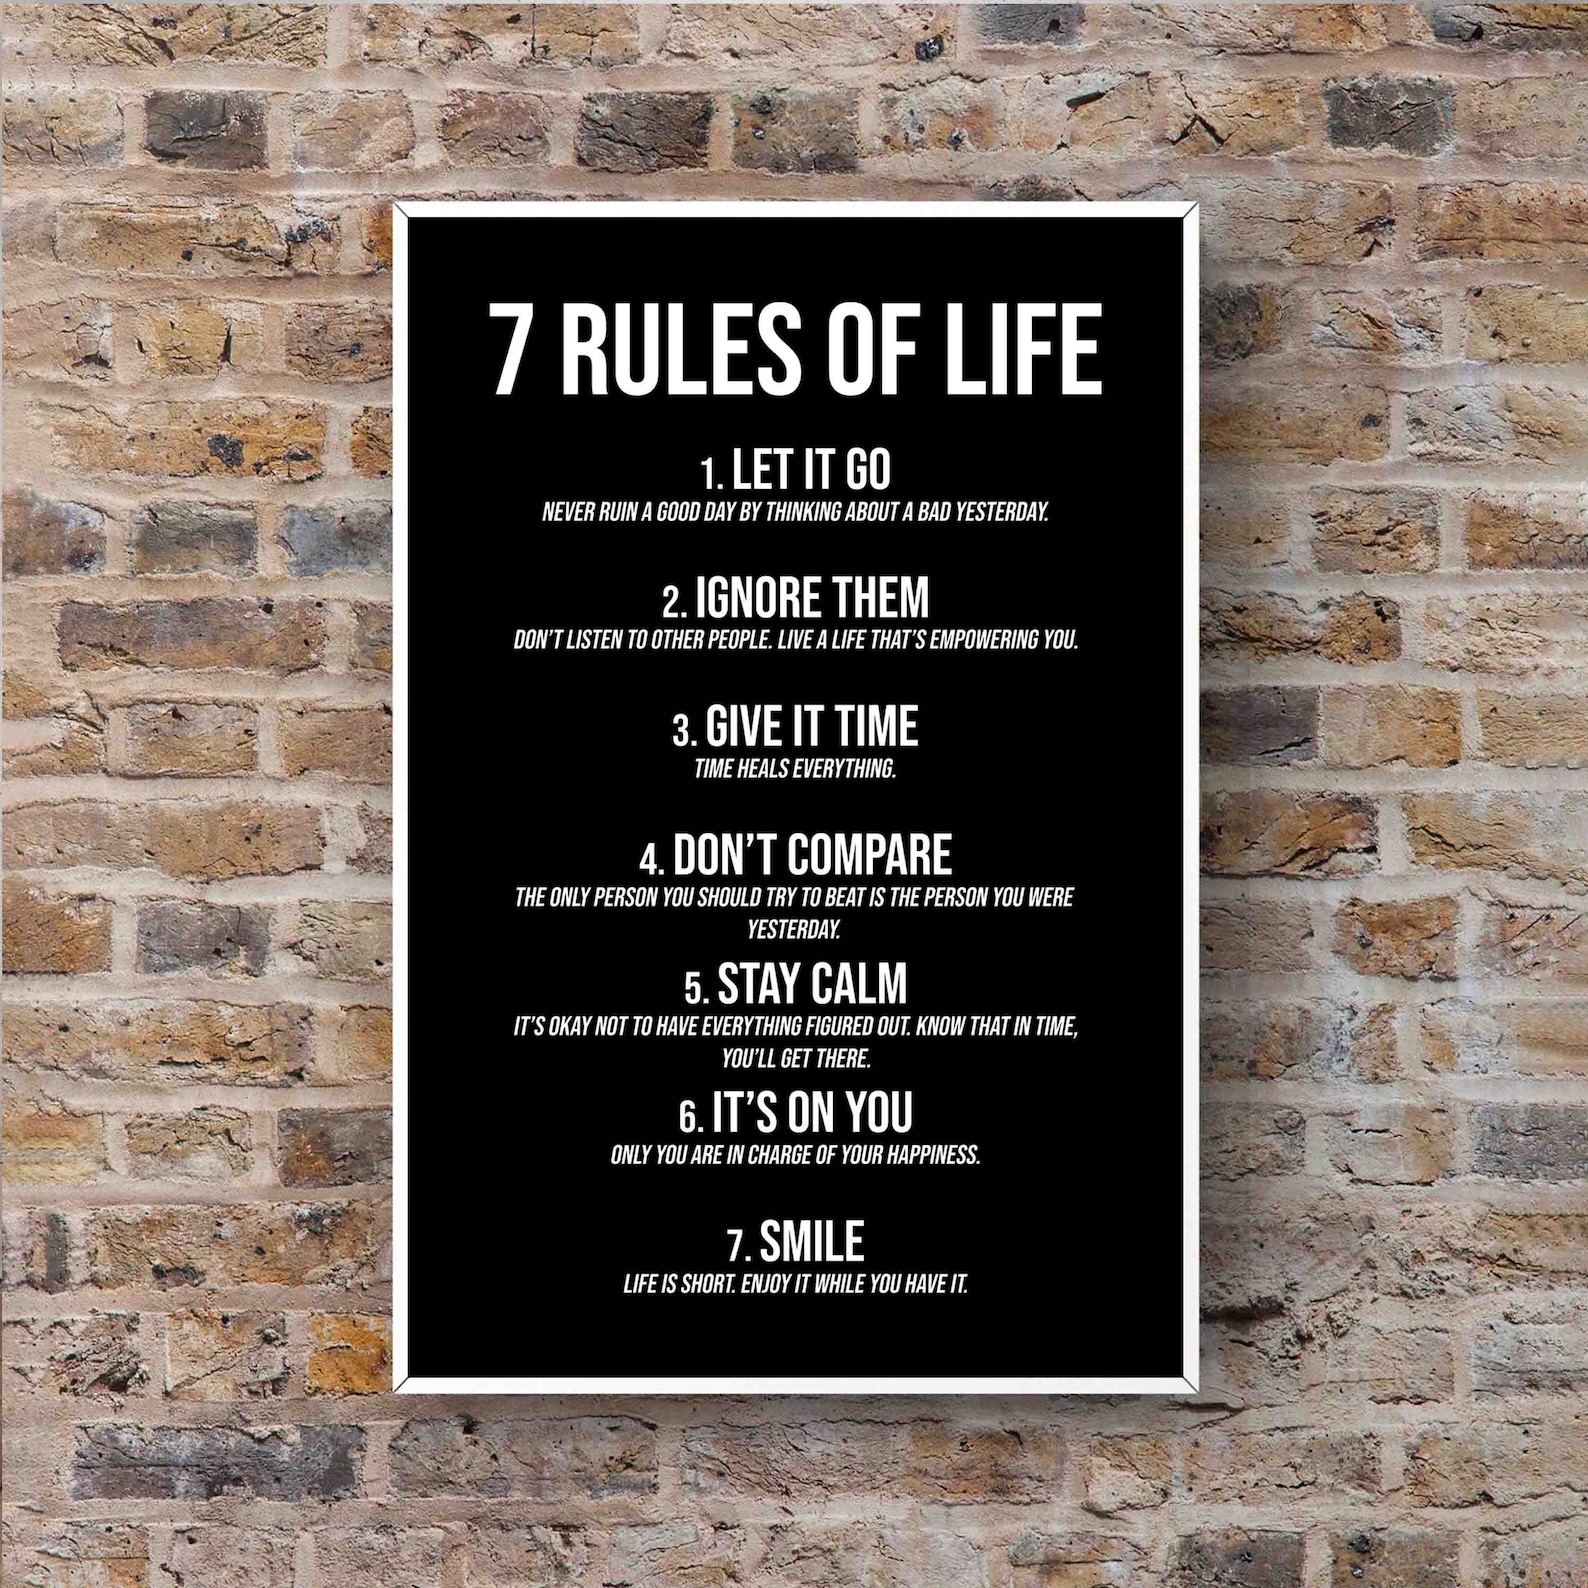 Life rules way